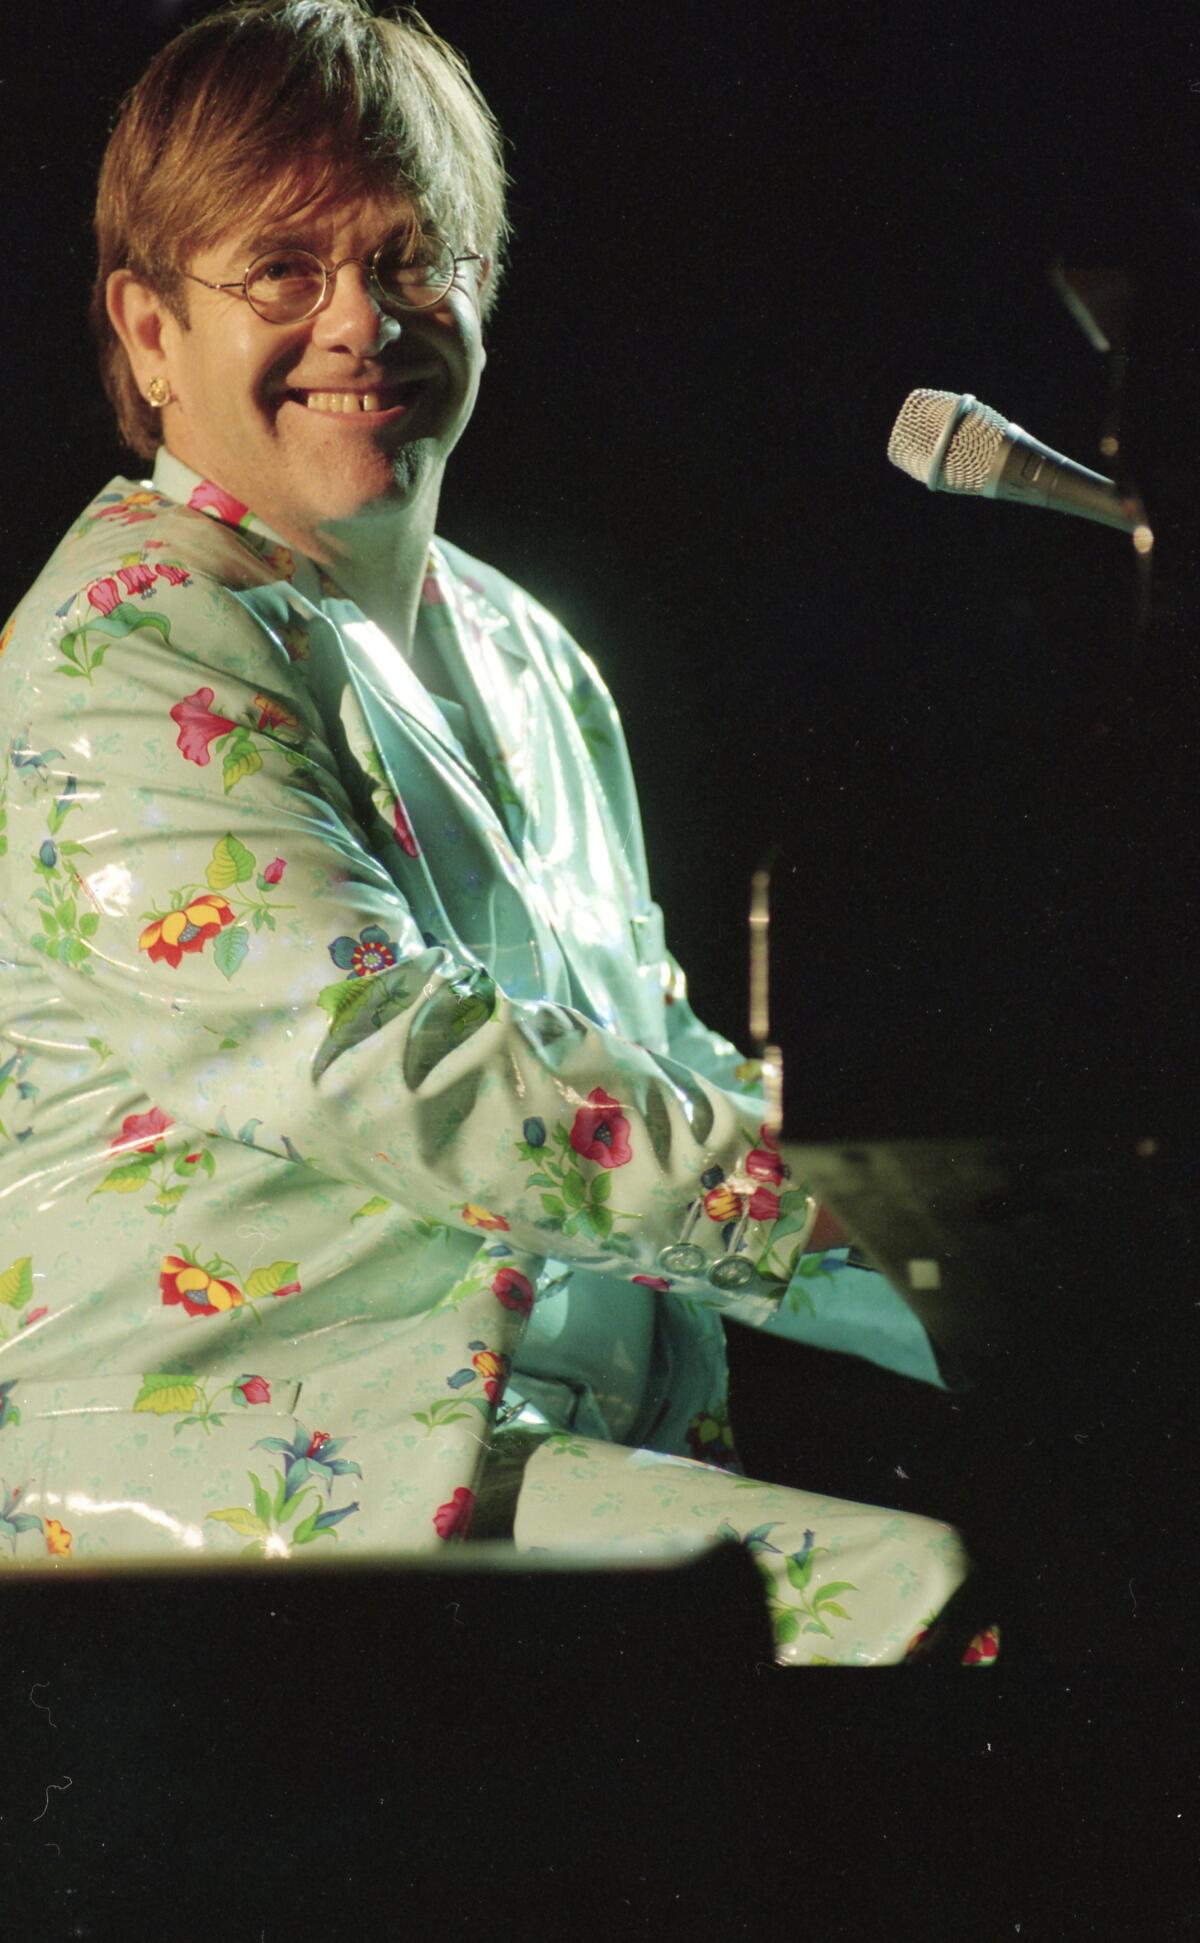 Elton John wowed the crowd at San Diego Jack Murphy Stadium on March 22, 1995